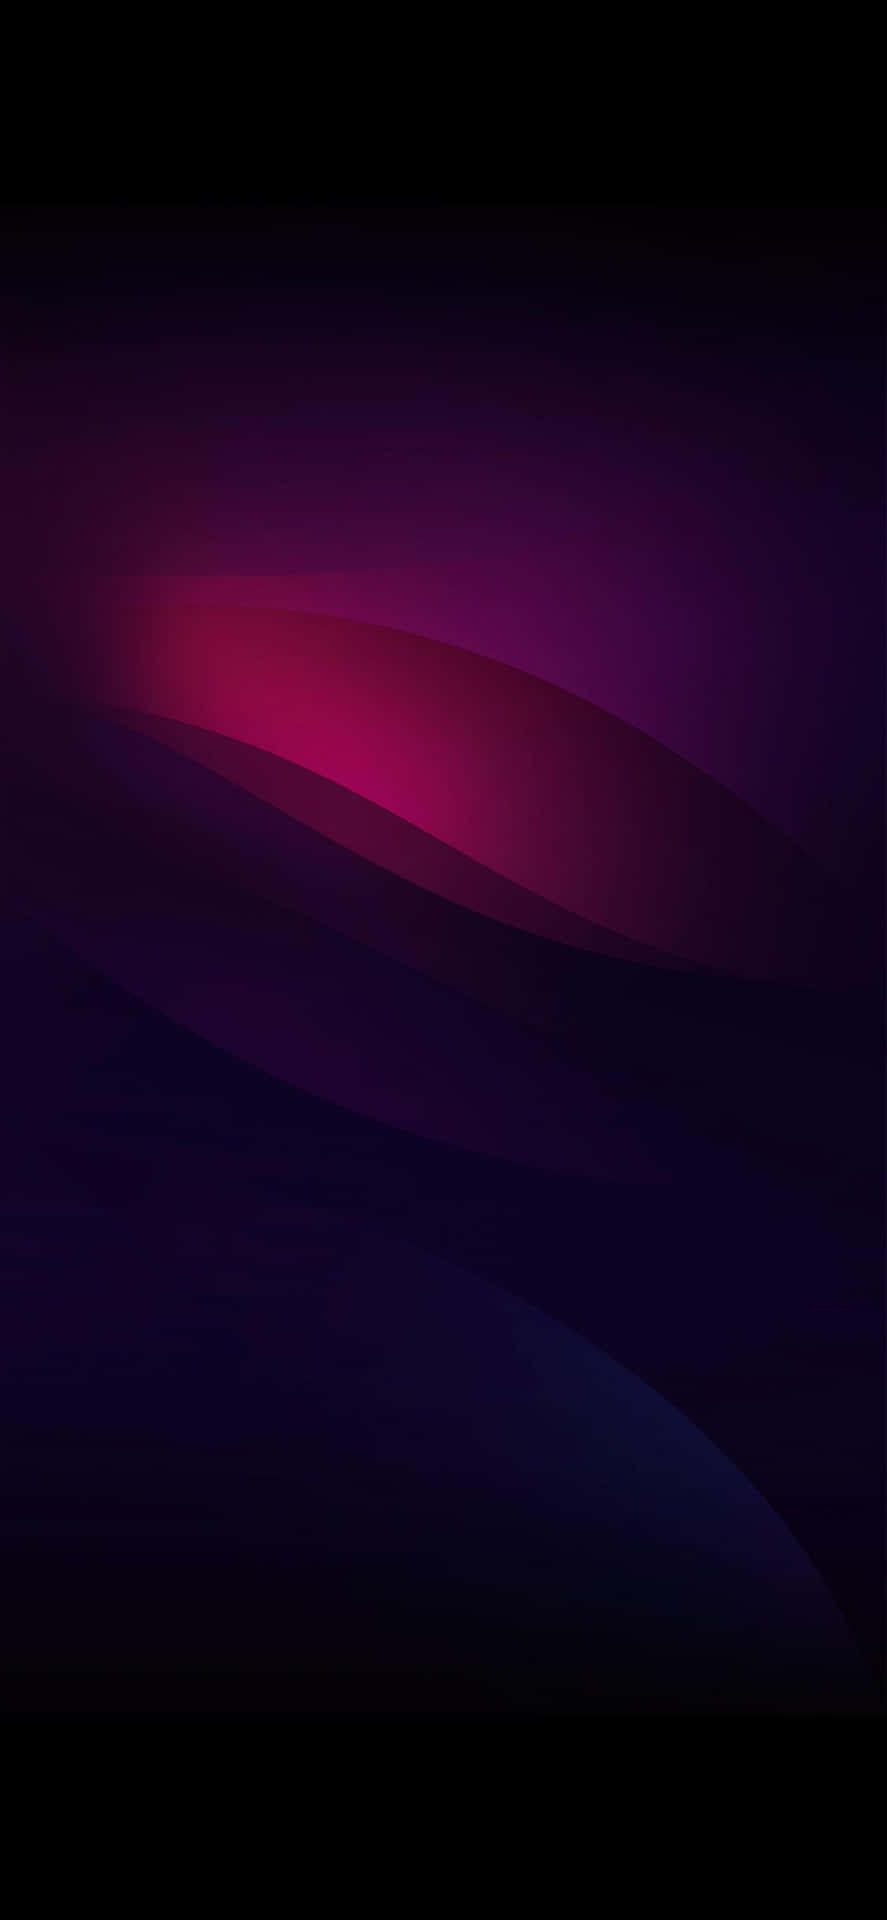 Iphone X Abstract Purple Light Wallpaper